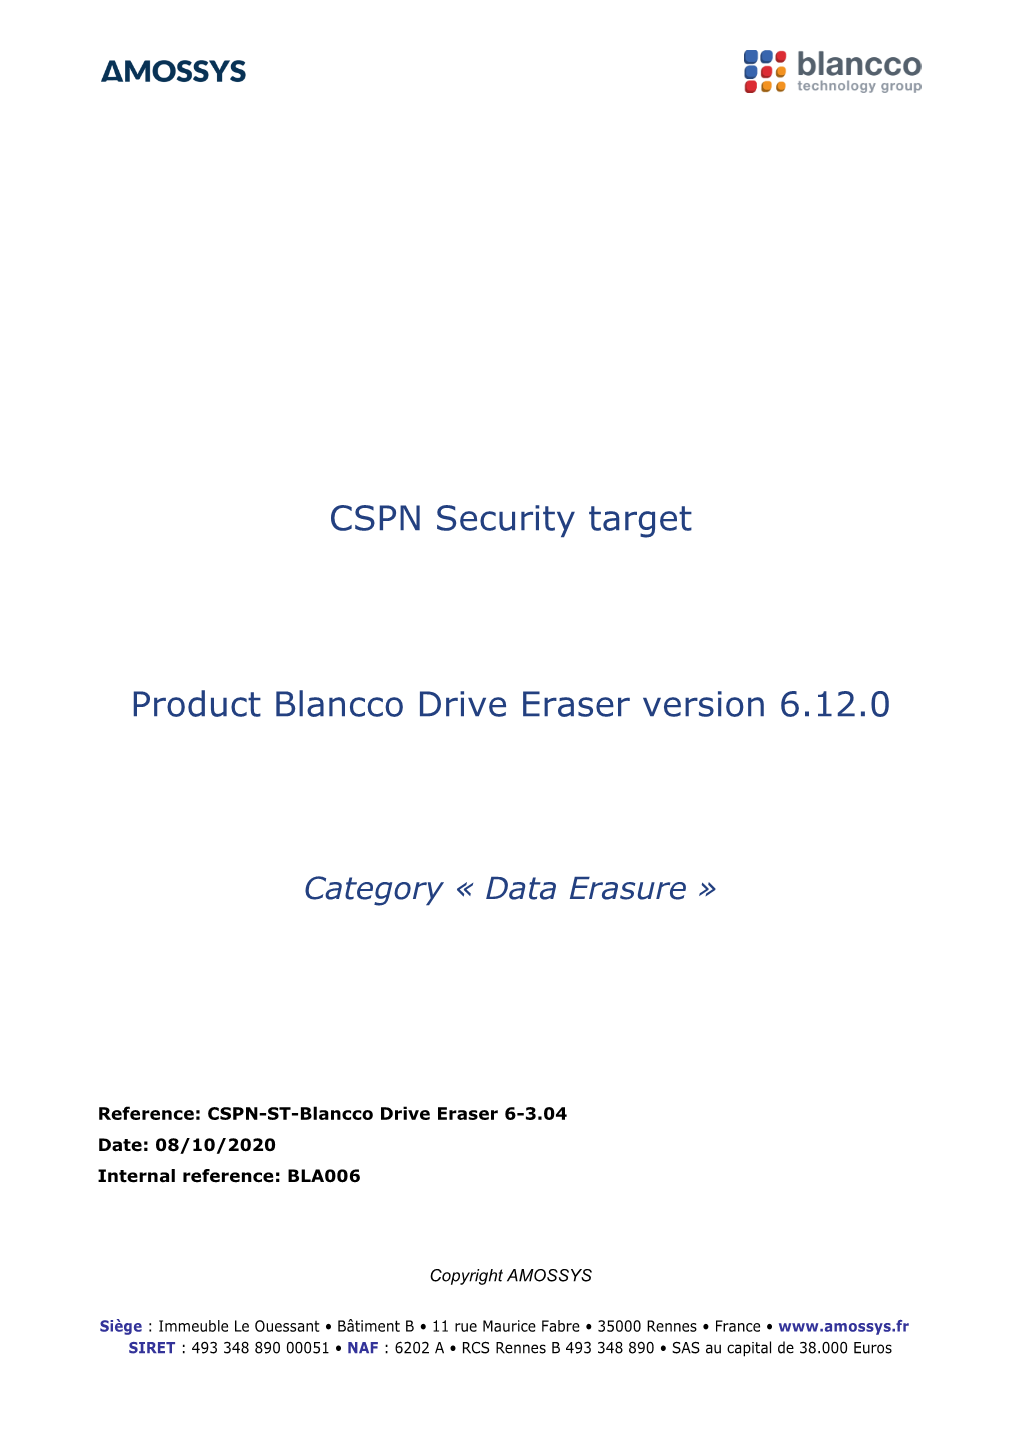 CSPN Security Target Product Blancco Drive Eraser Version 6.12.0